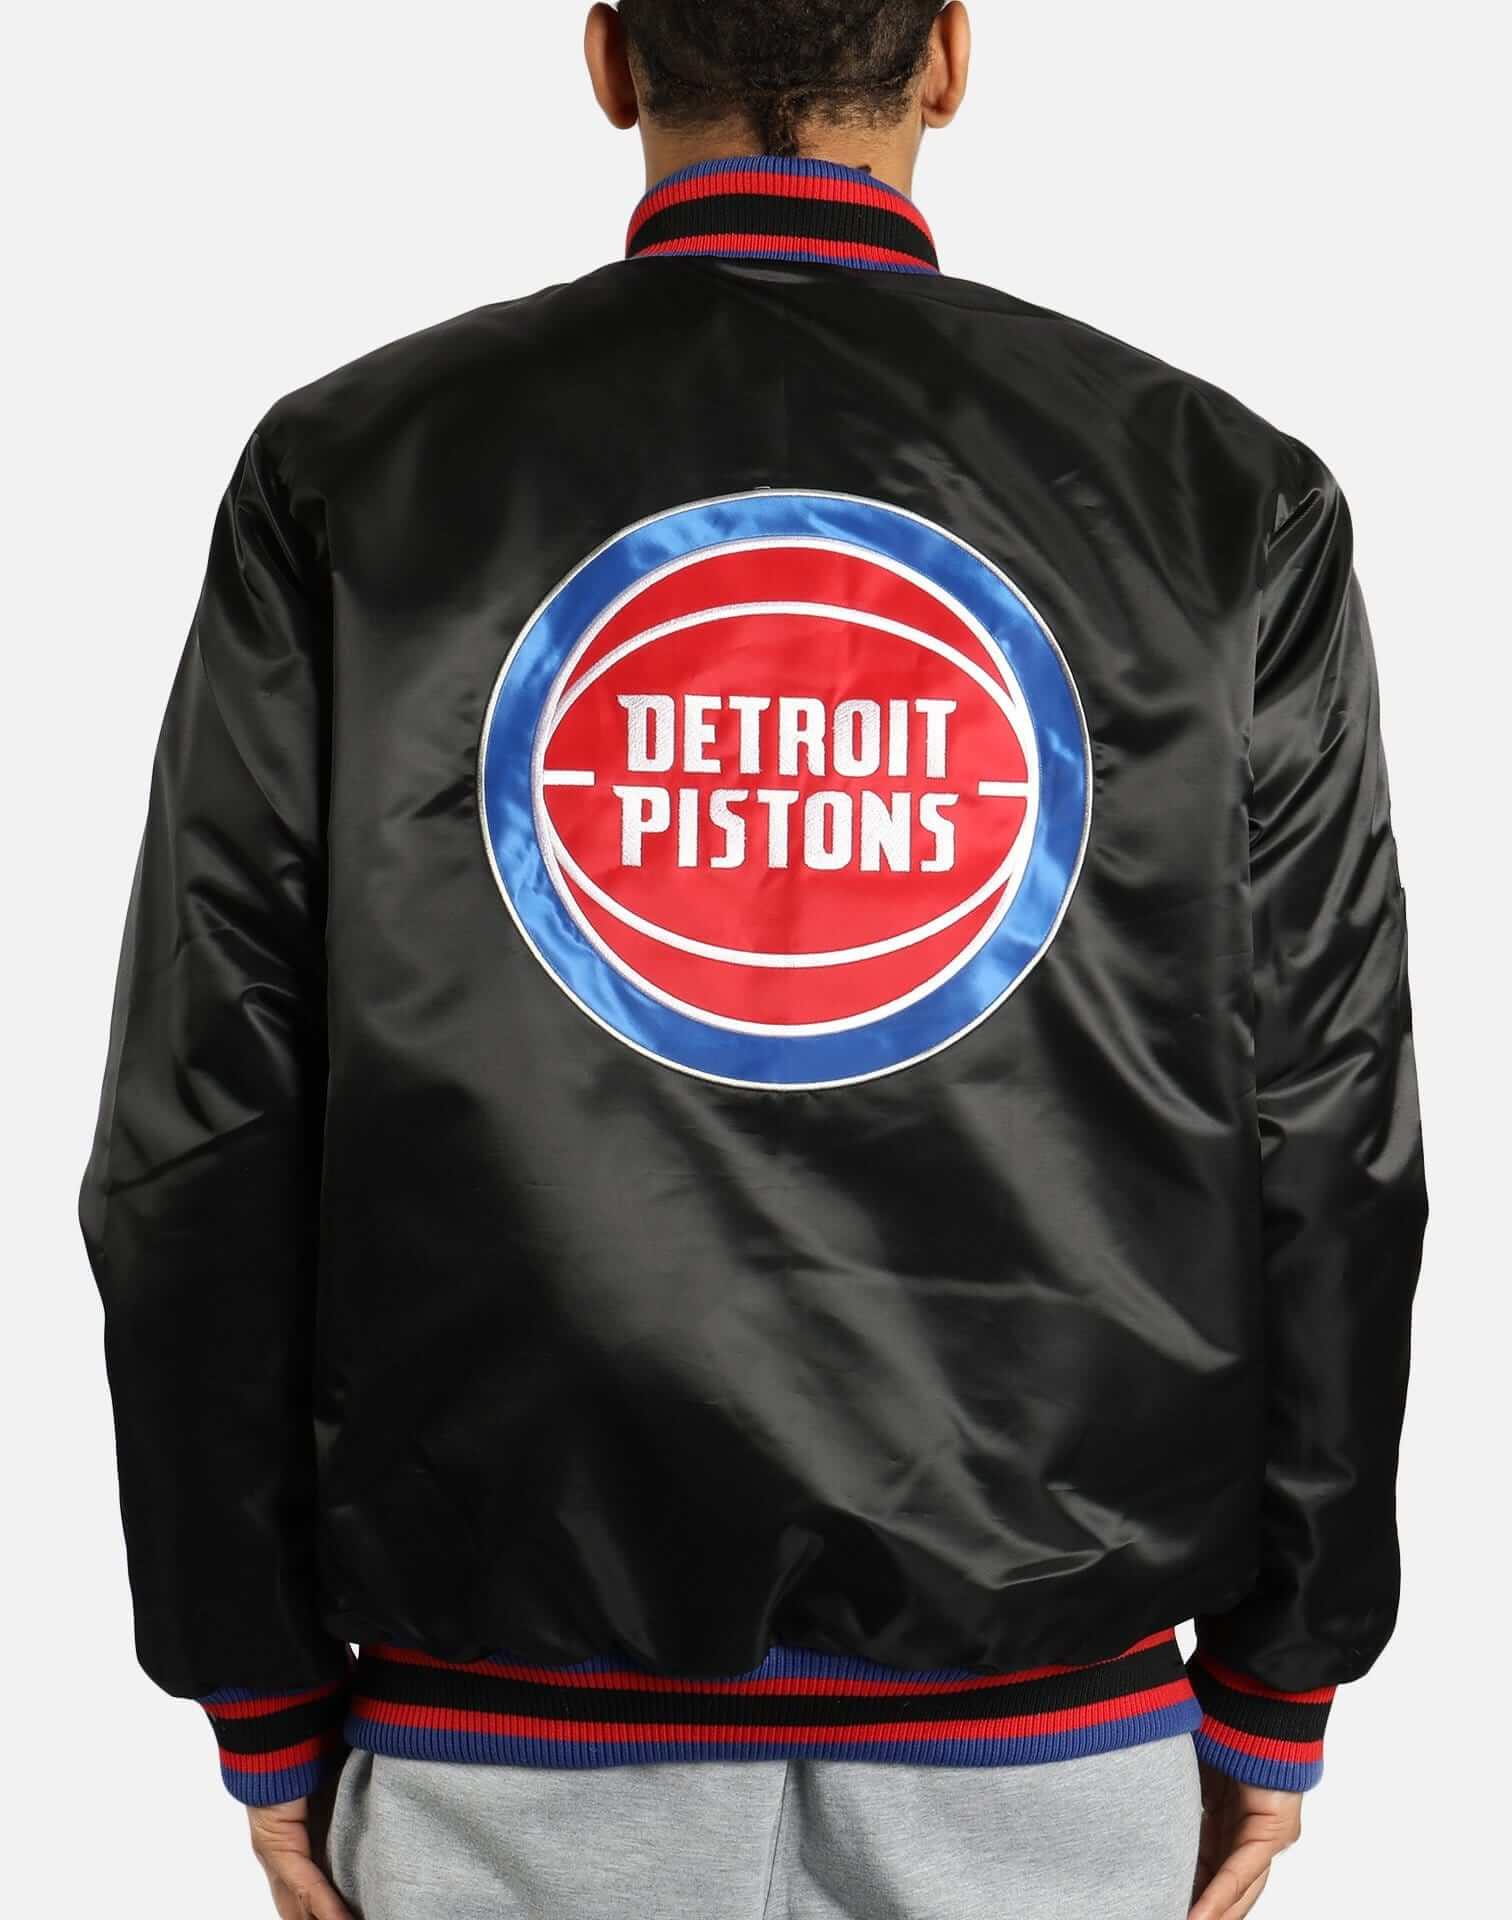 Maker of Jacket NBA Teams Jackets Detroit Pistons Hardwood Classics Satin